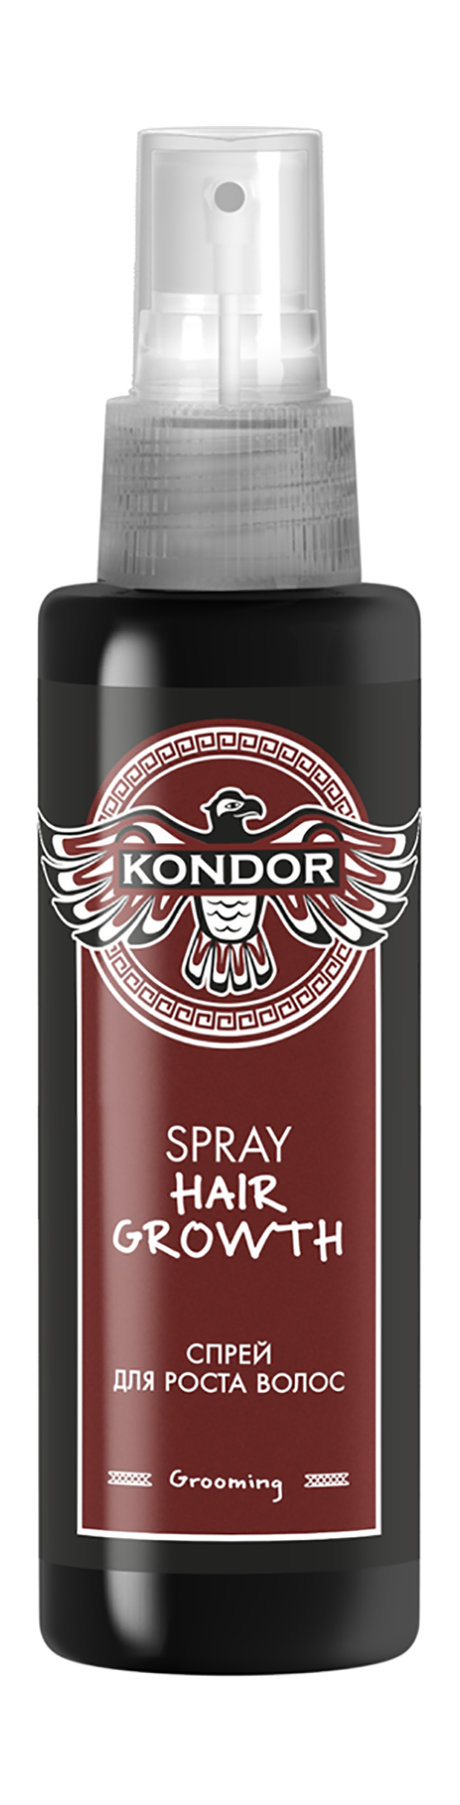 kondor grooming hair growth spray